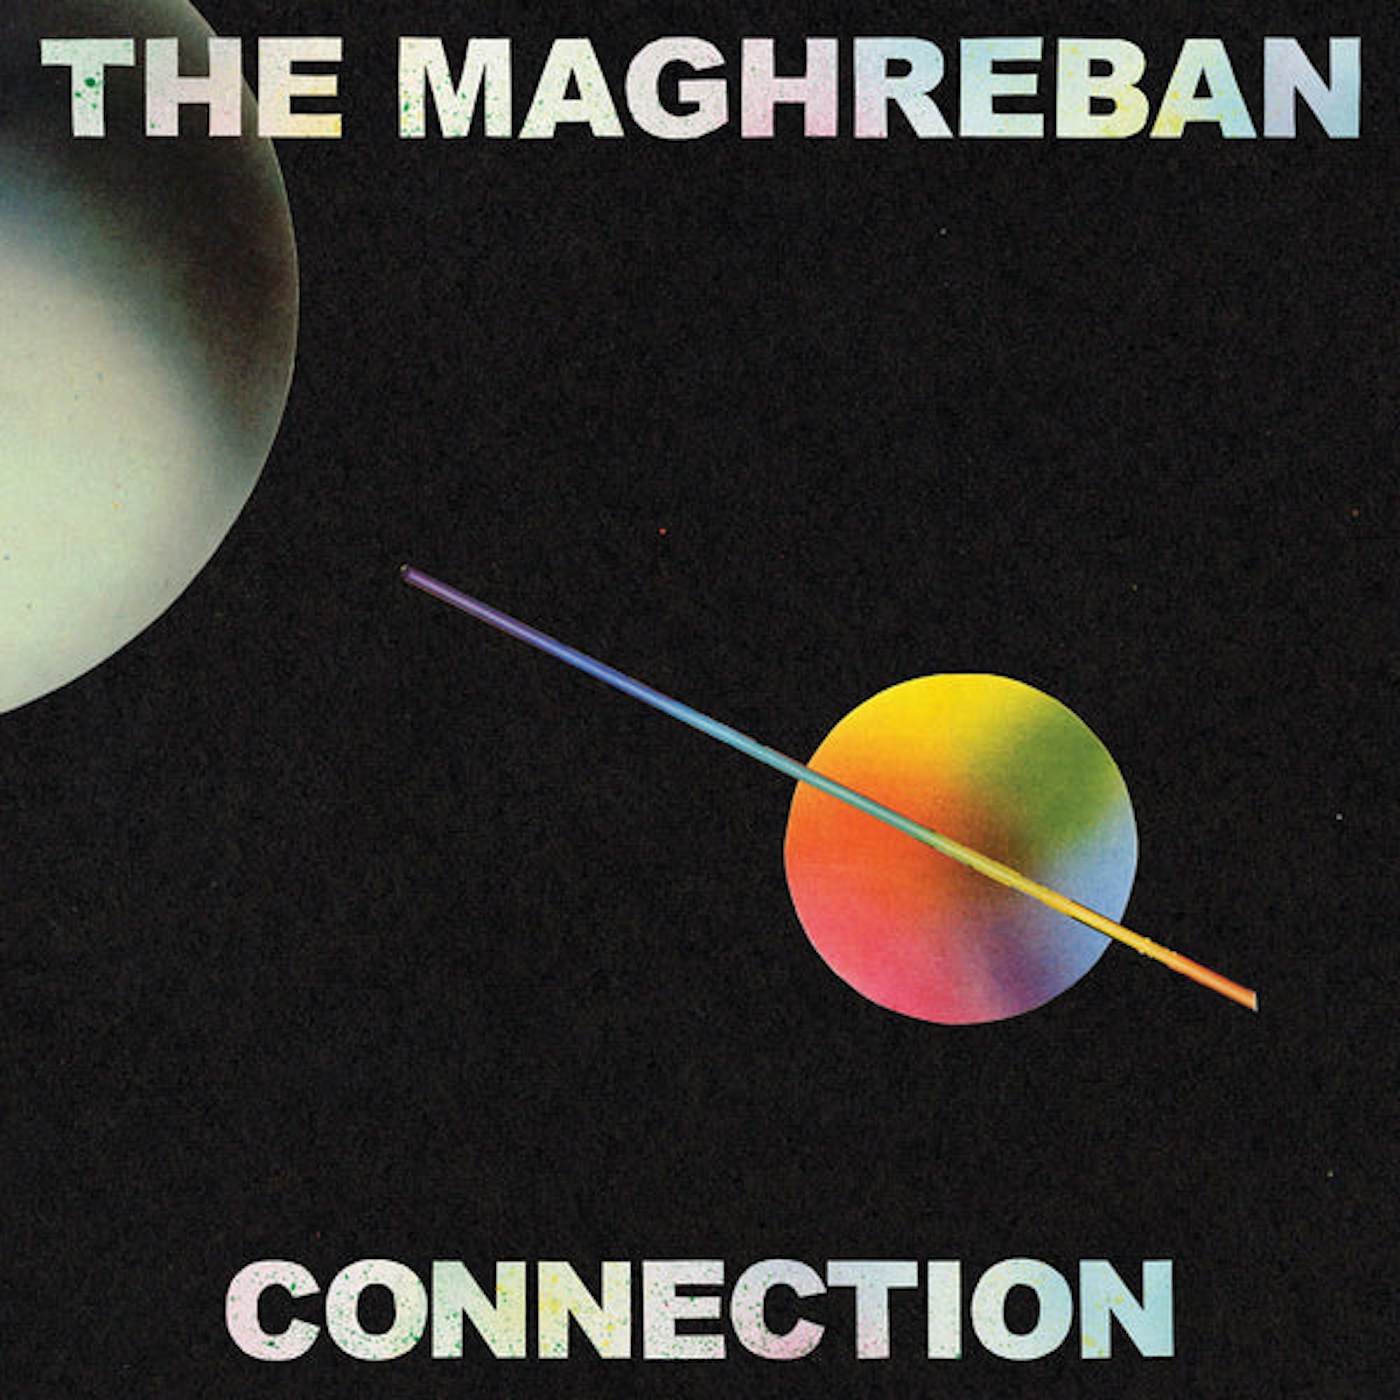 The Maghreban Connection Vinyl Record